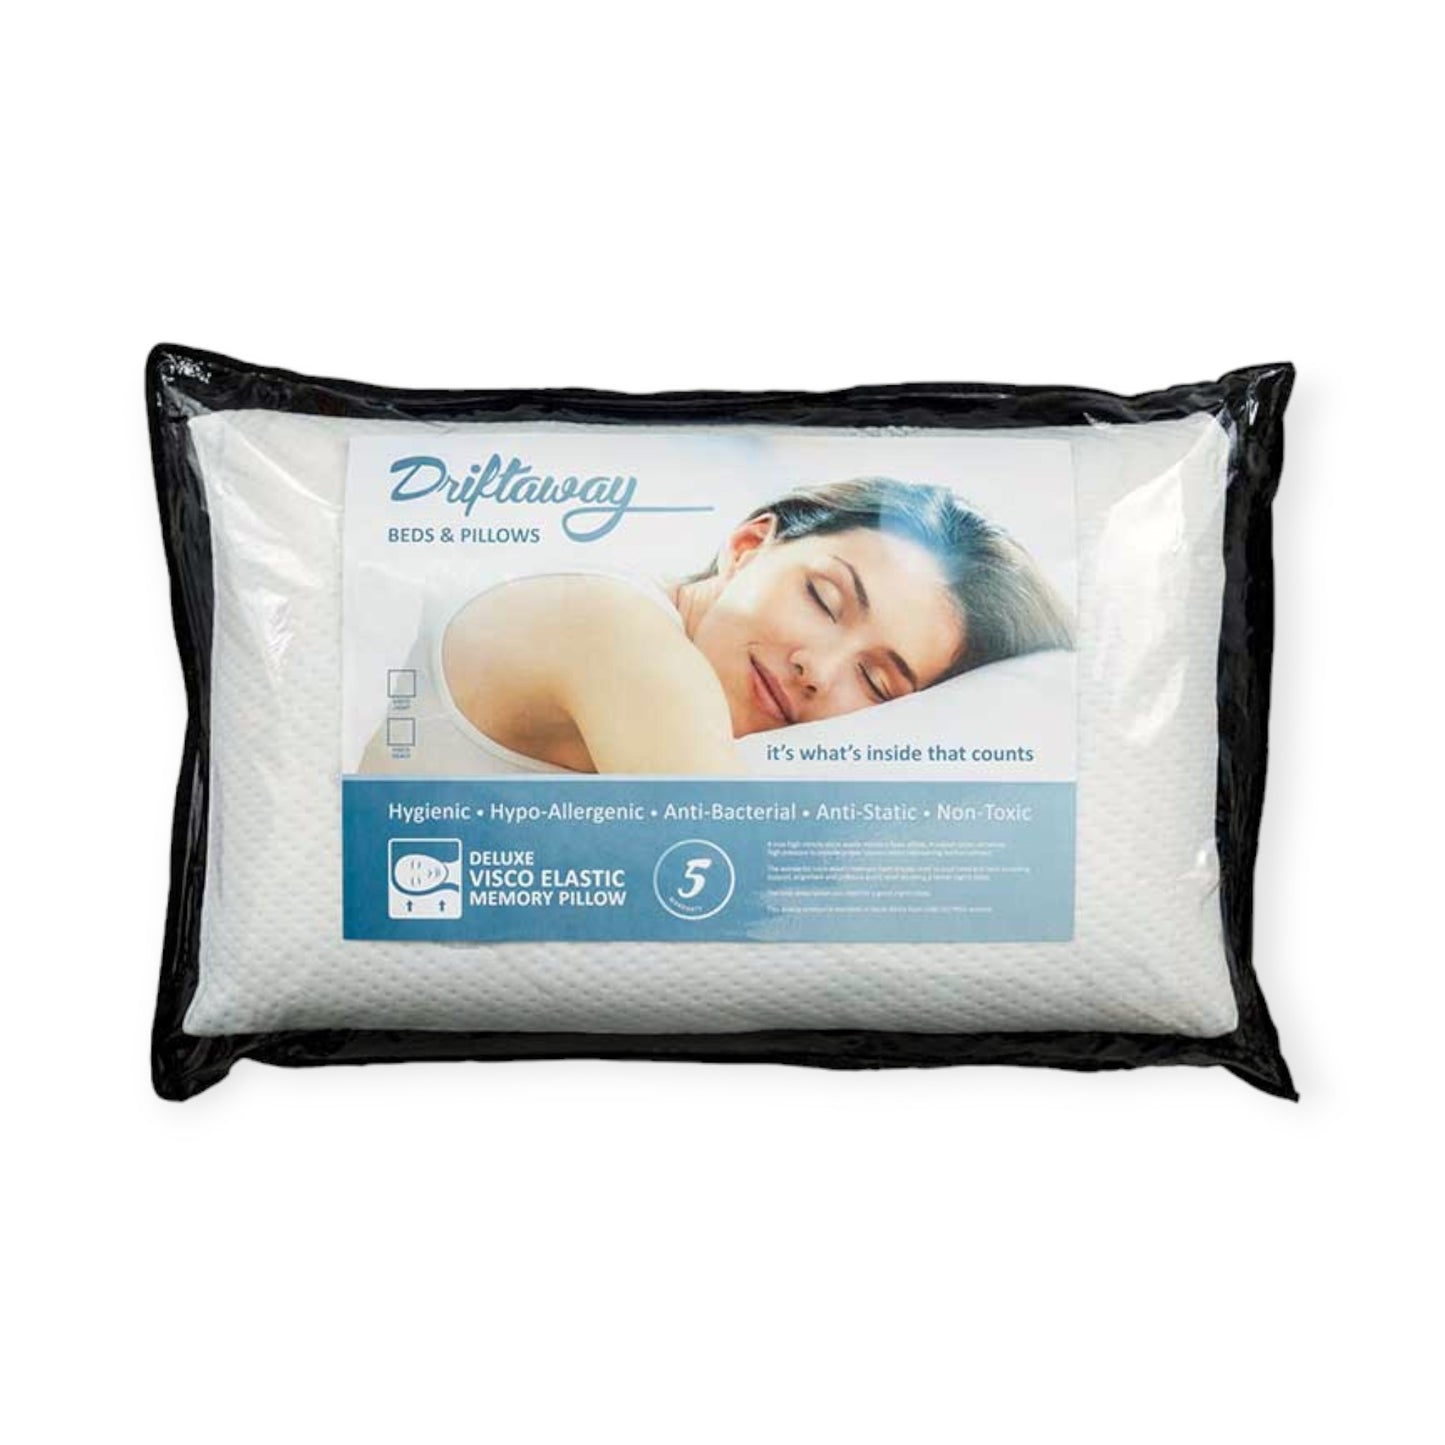 Driftaway Classic Memory Foam Pillow